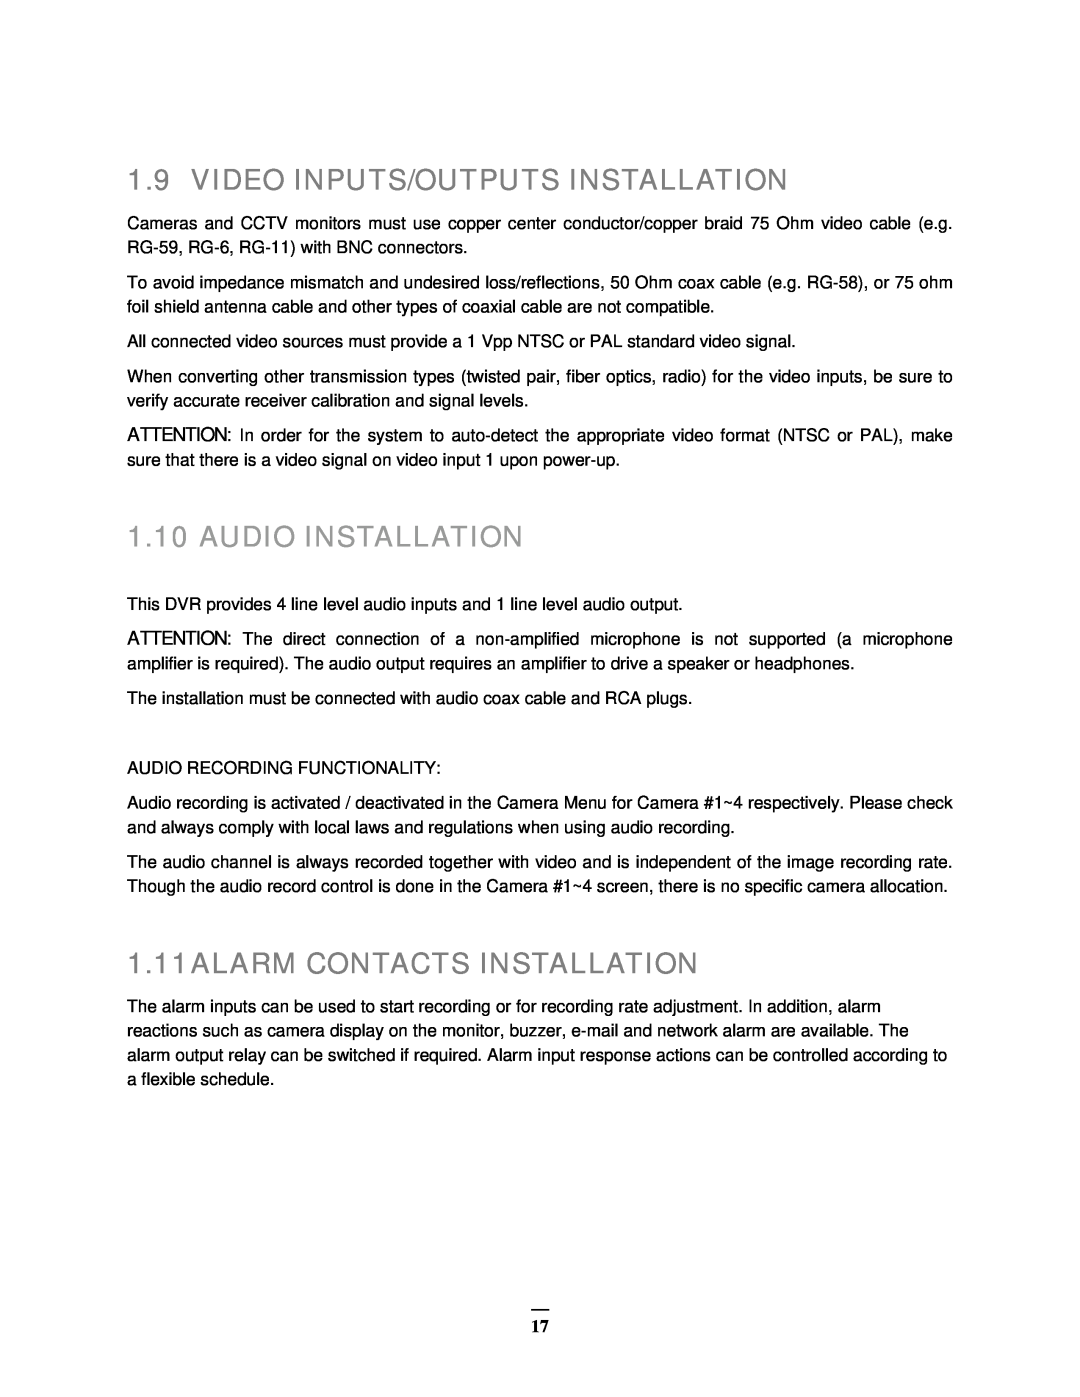 EverFocus EMV400 user manual Video Inputs/Outputs Installation, 1.11ALARM CONTACTS INSTALLATION, Audio Installation 